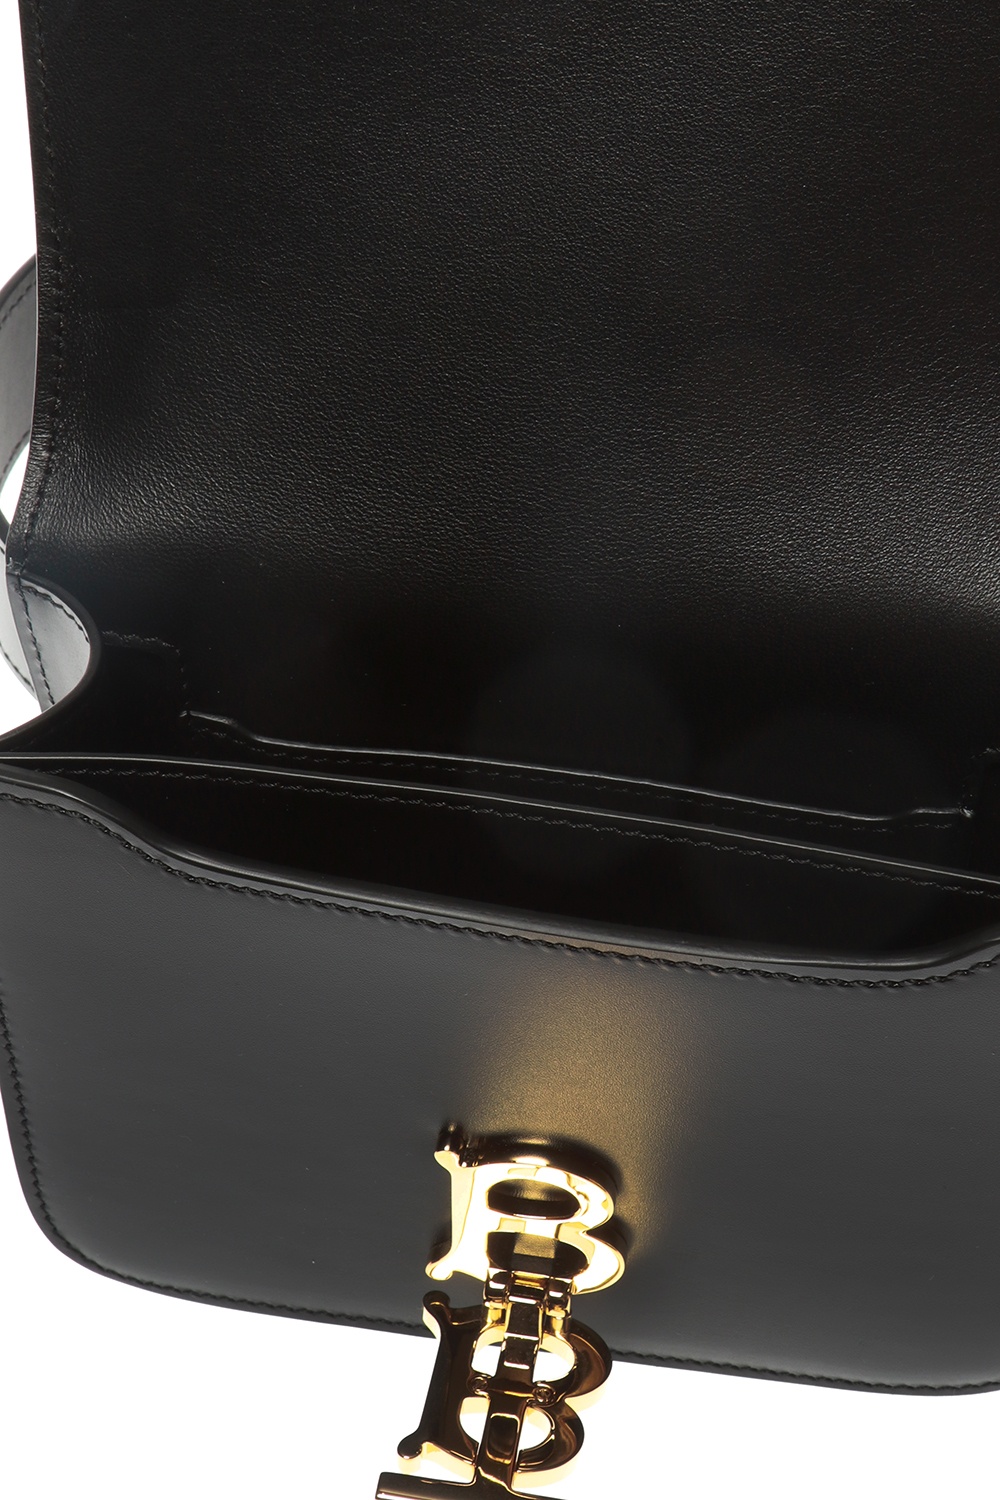 Belt bags Burberry - TB vanilla leather structured belt bag - 8012202